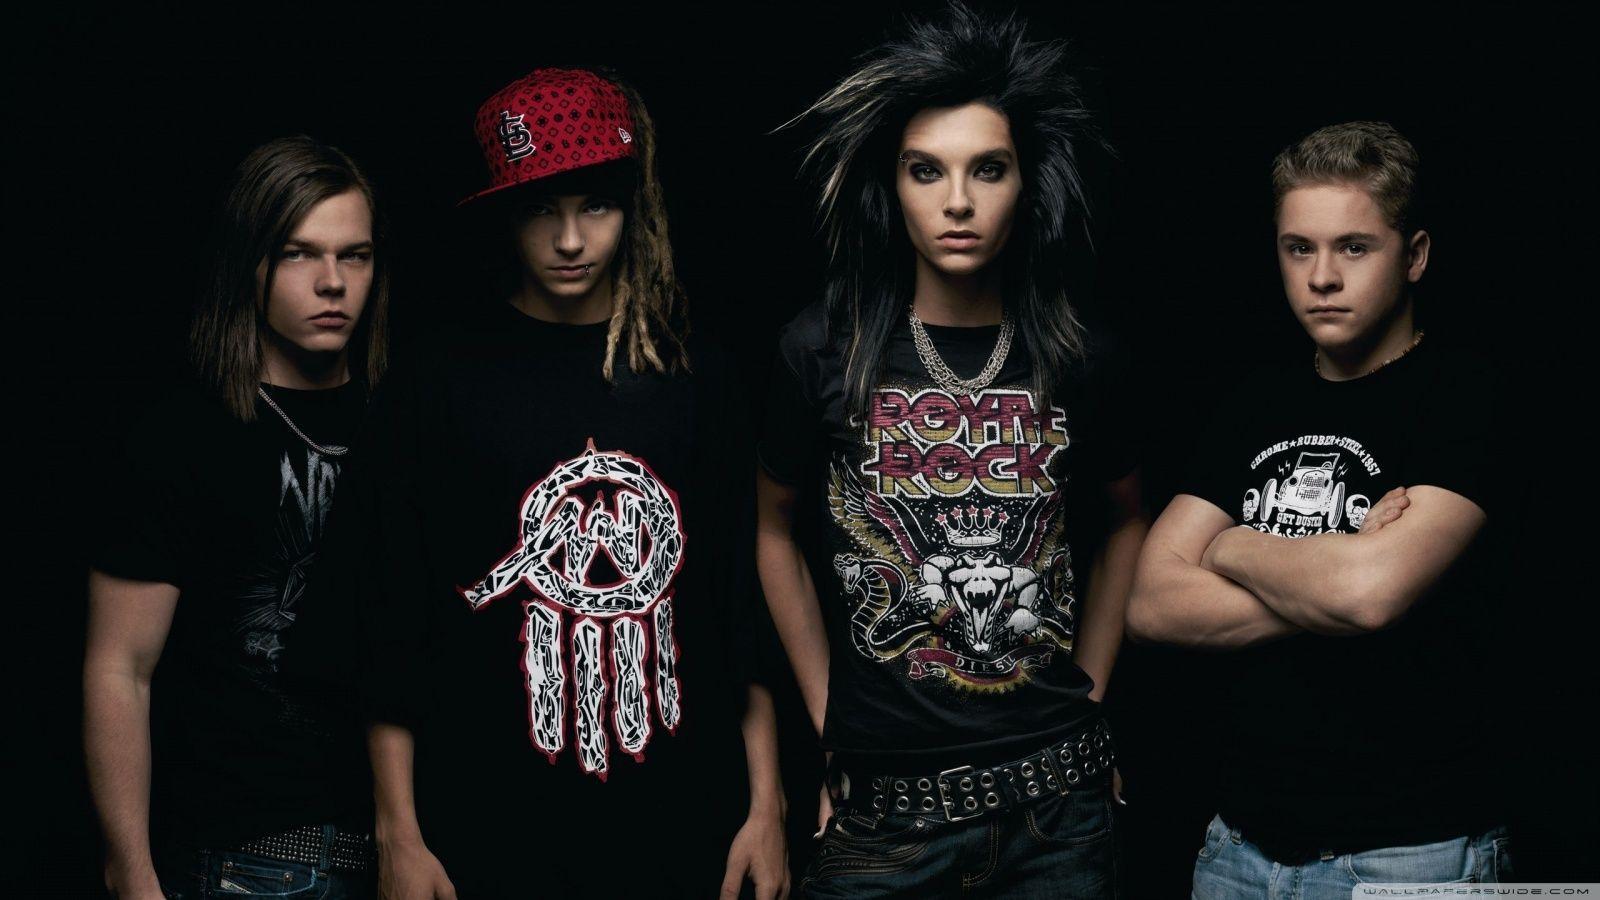 Tokio Hotel - Members, Ages, Trivia